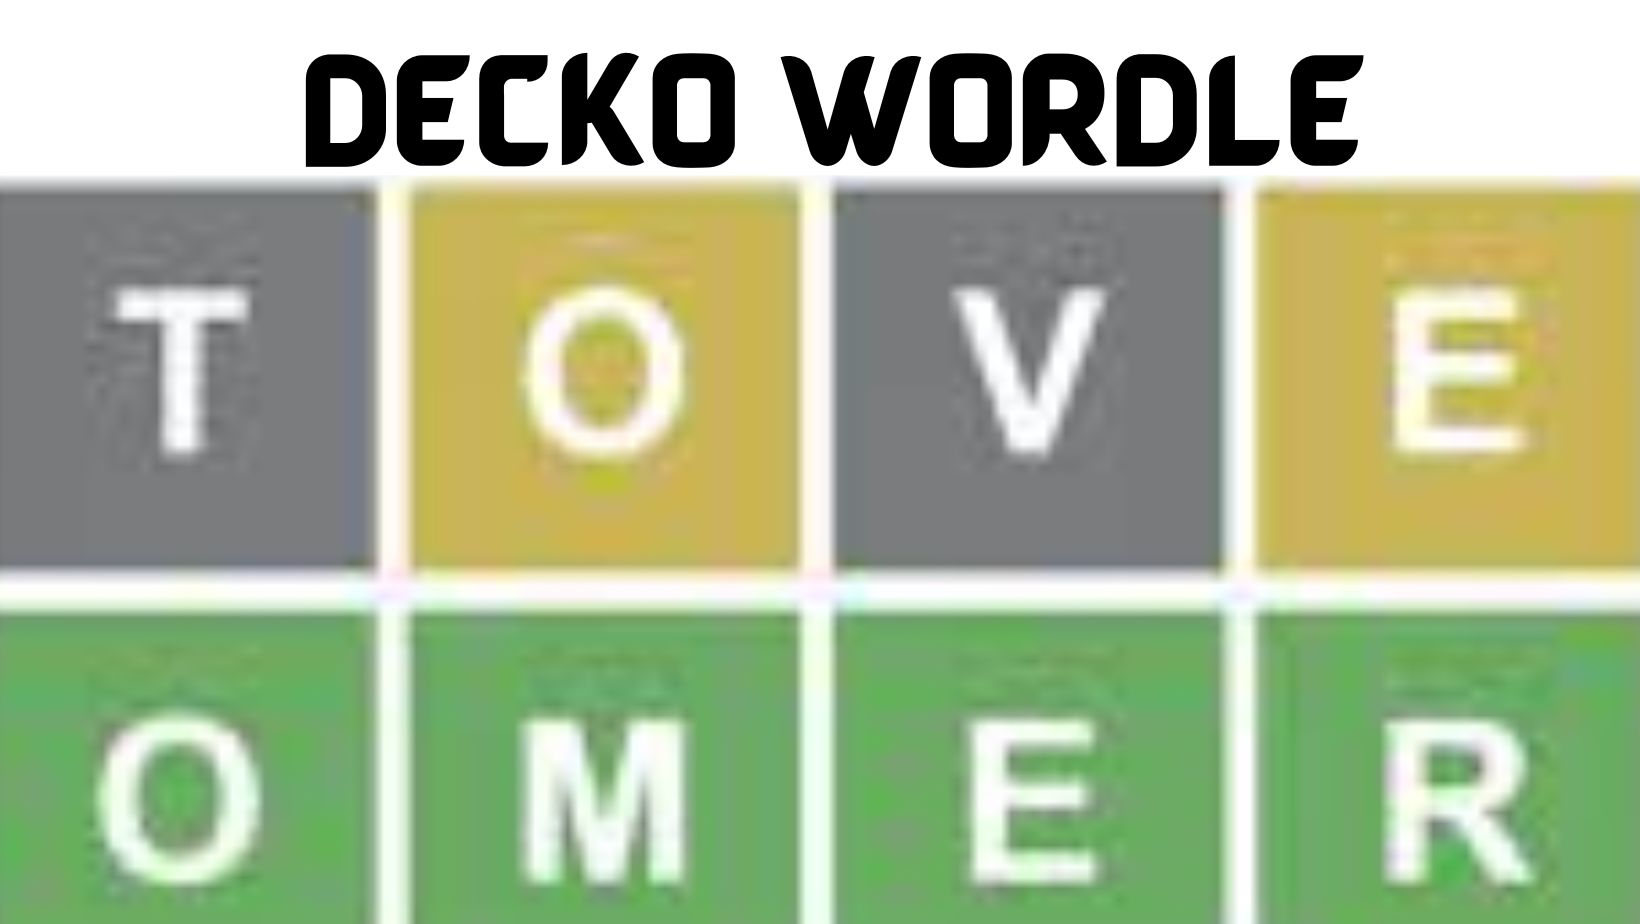 Decko Wordle